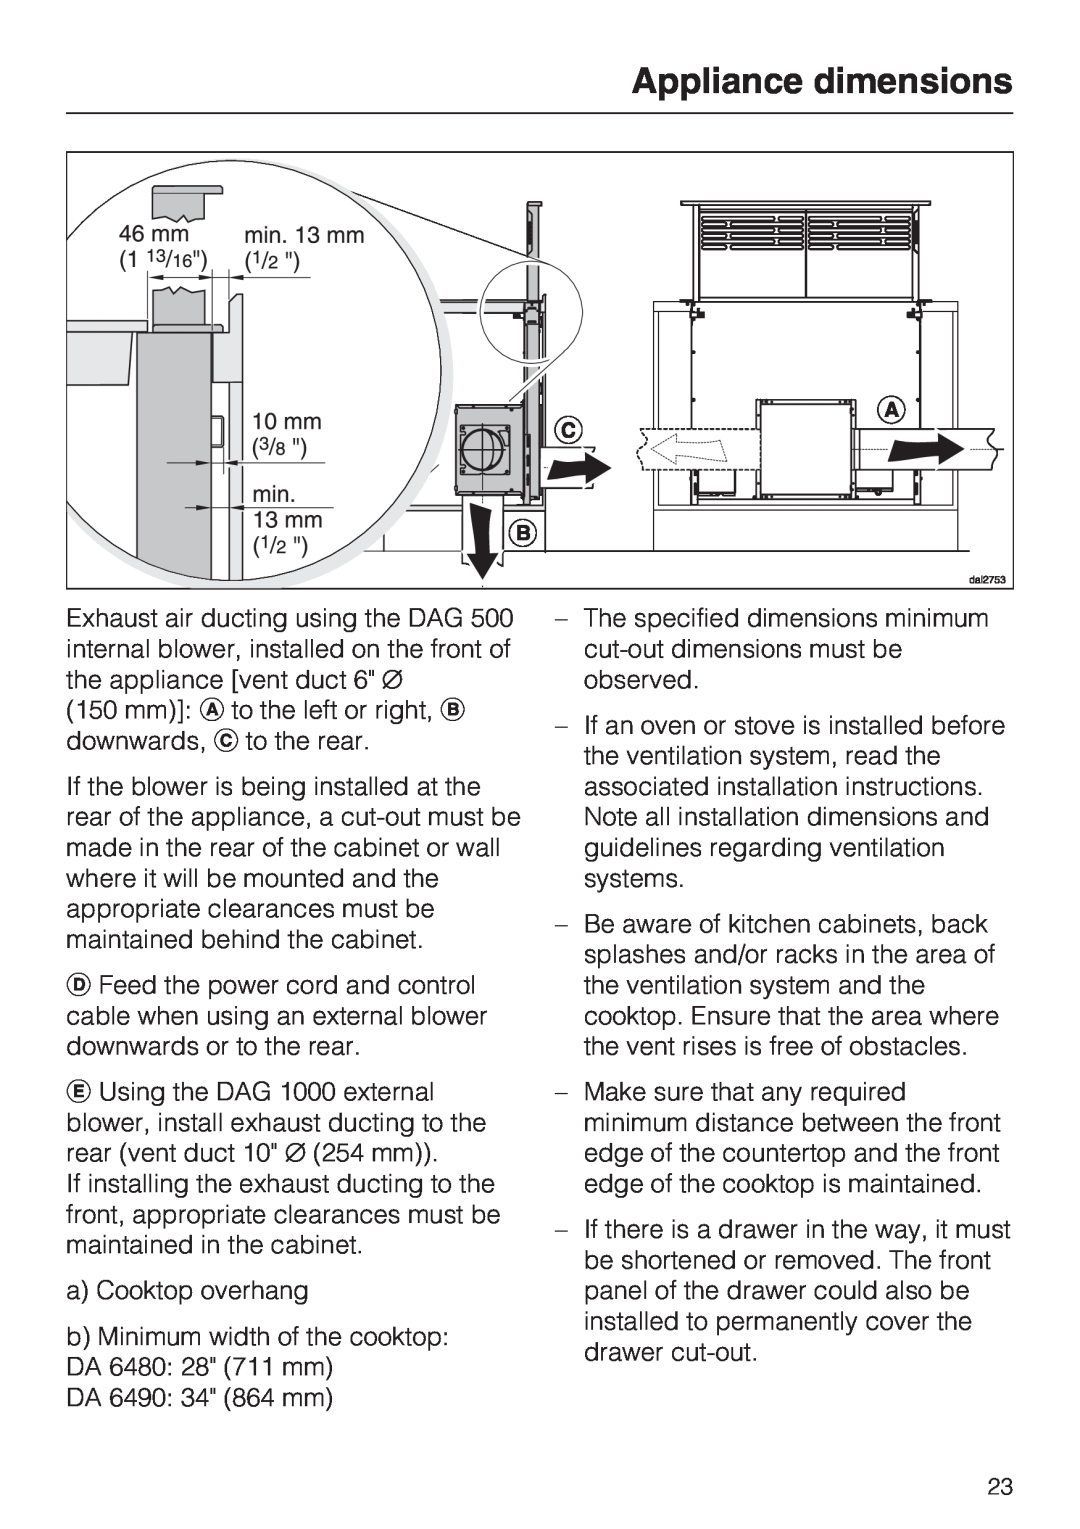 Miele DAG 1000, DA 6490, DA 6480, DAG 500 installation instructions Appliance dimensions, aCooktop overhang 